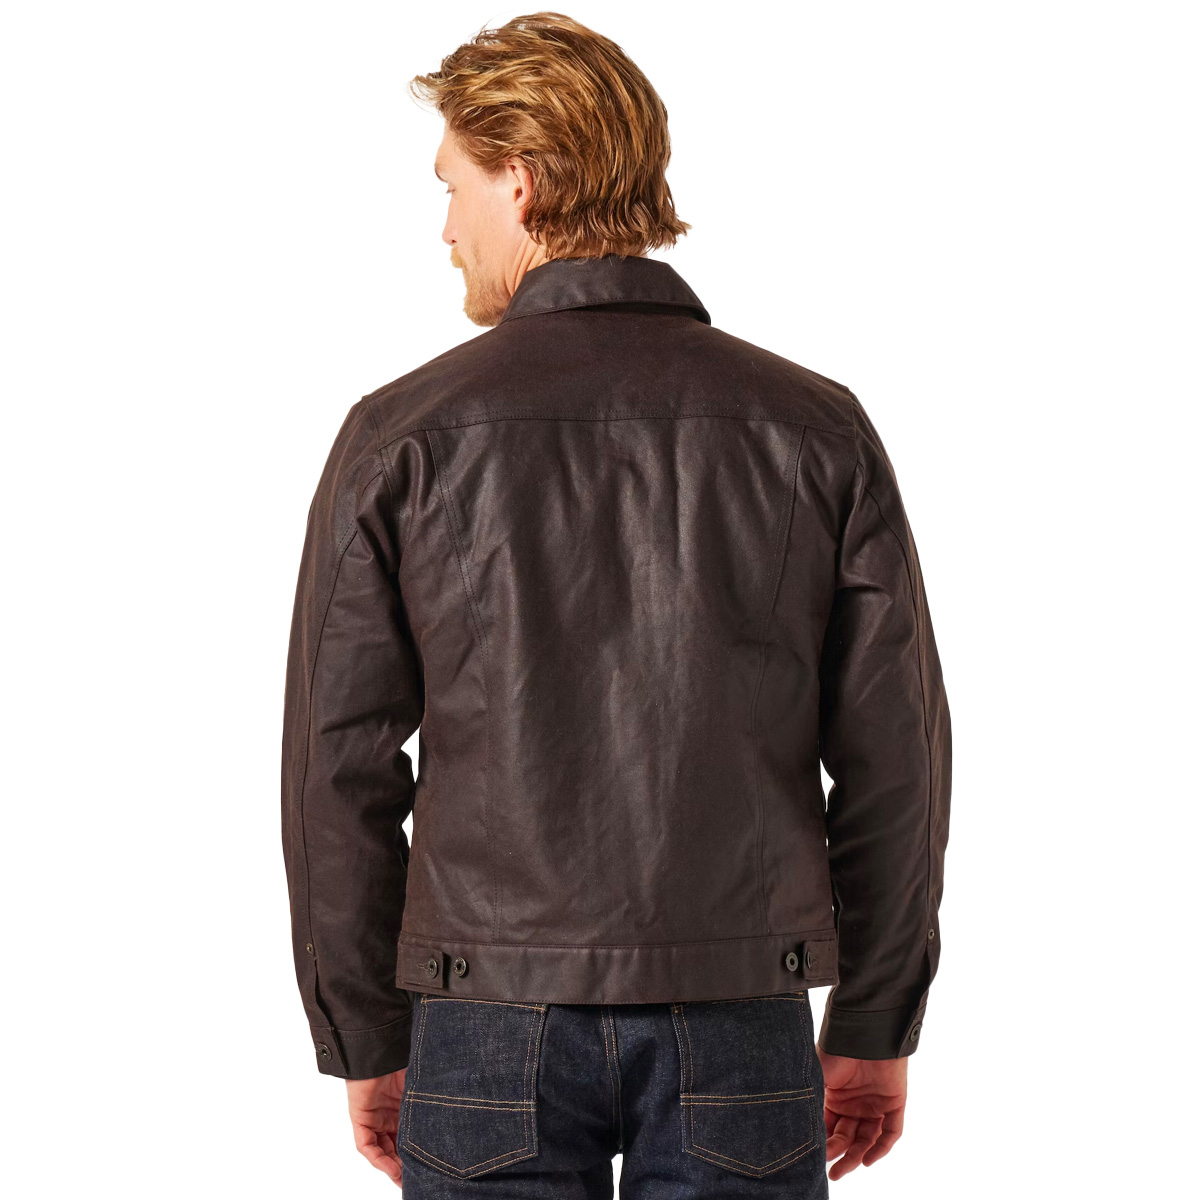 Filson Tin Cloth Short Lined Cruiser Jacket Black, tough work jacket